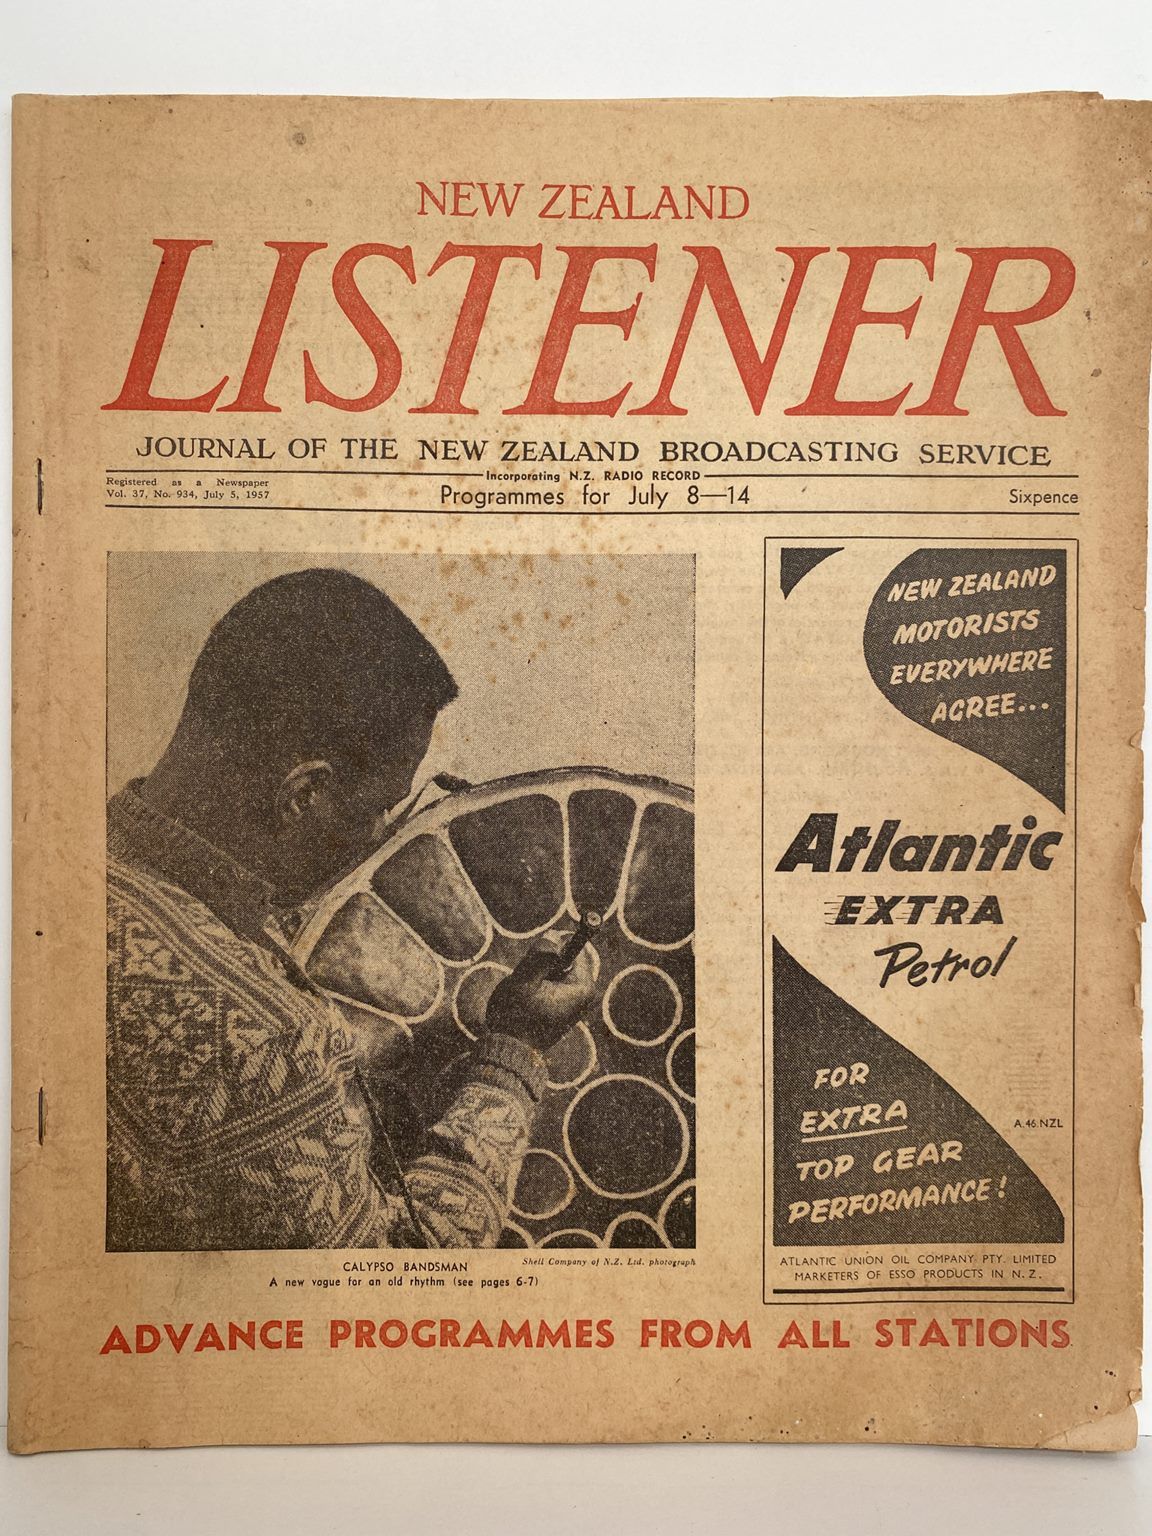 OLD NEWSPAPER: New Zealand Listener - Vol 37, No 934 - 5 Jan 1957